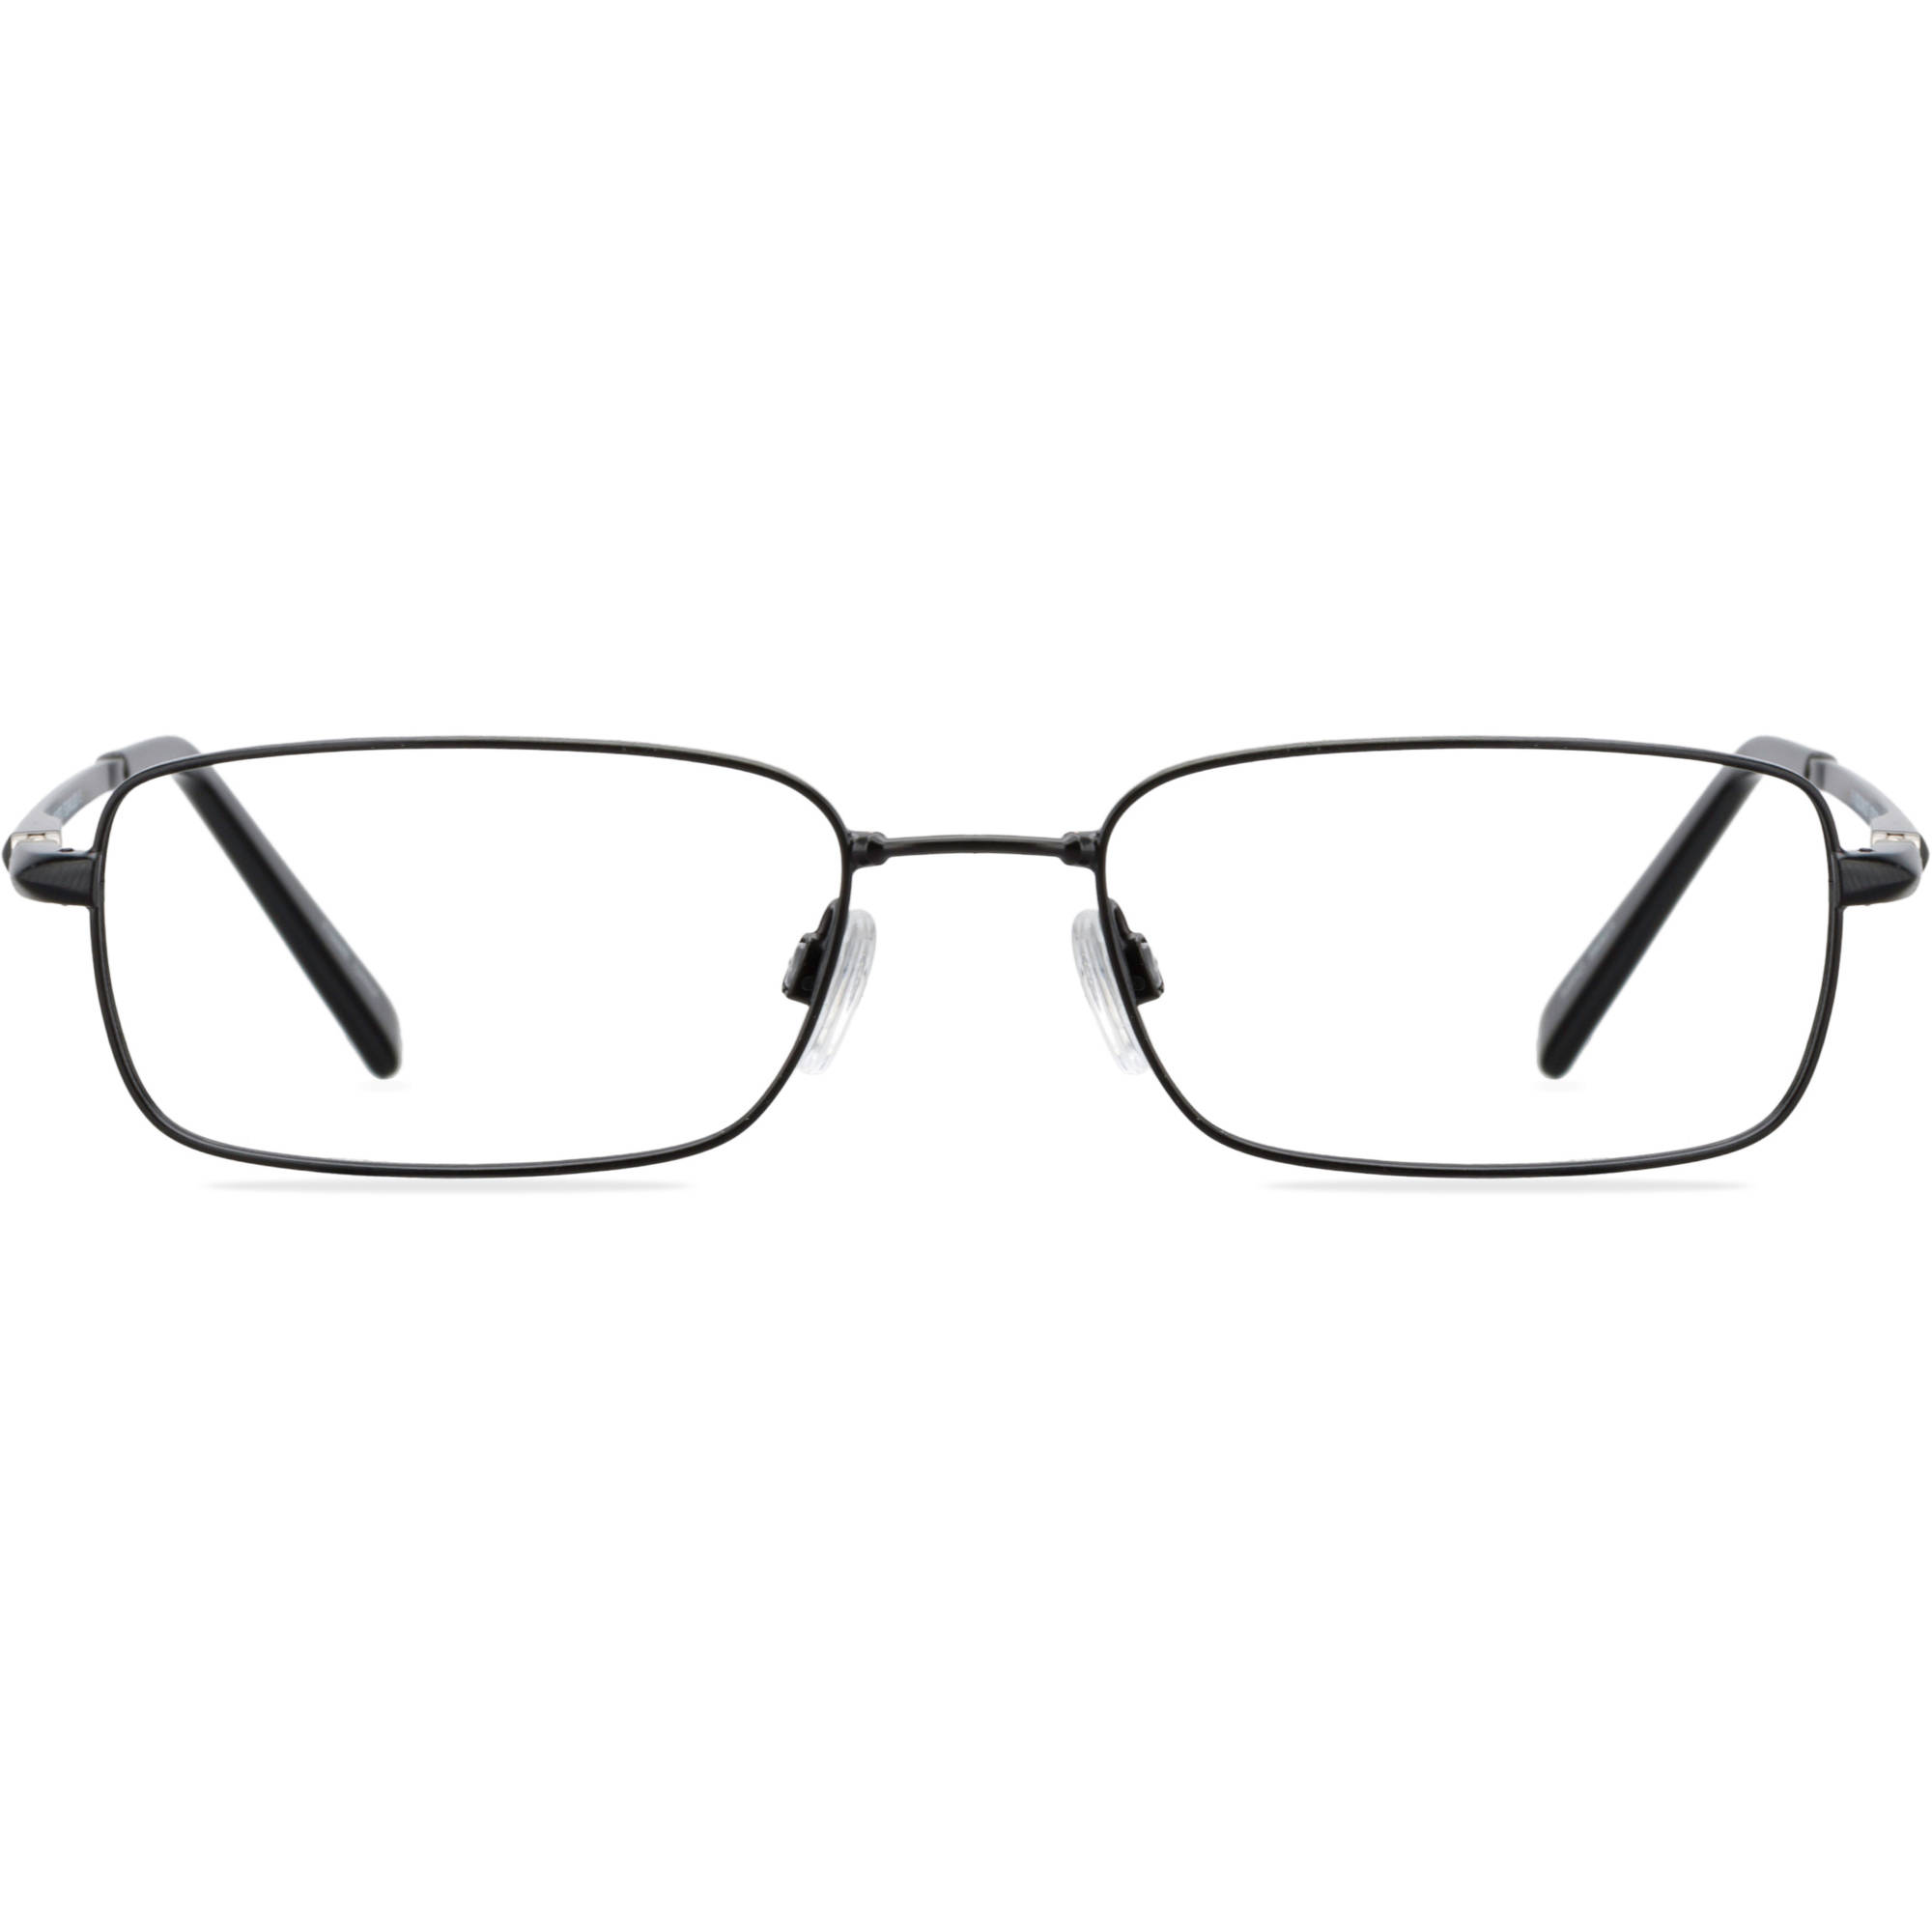 EasyTwist TurboFlex Mens Prescription Glasses, ET841 Black - Walmart.com